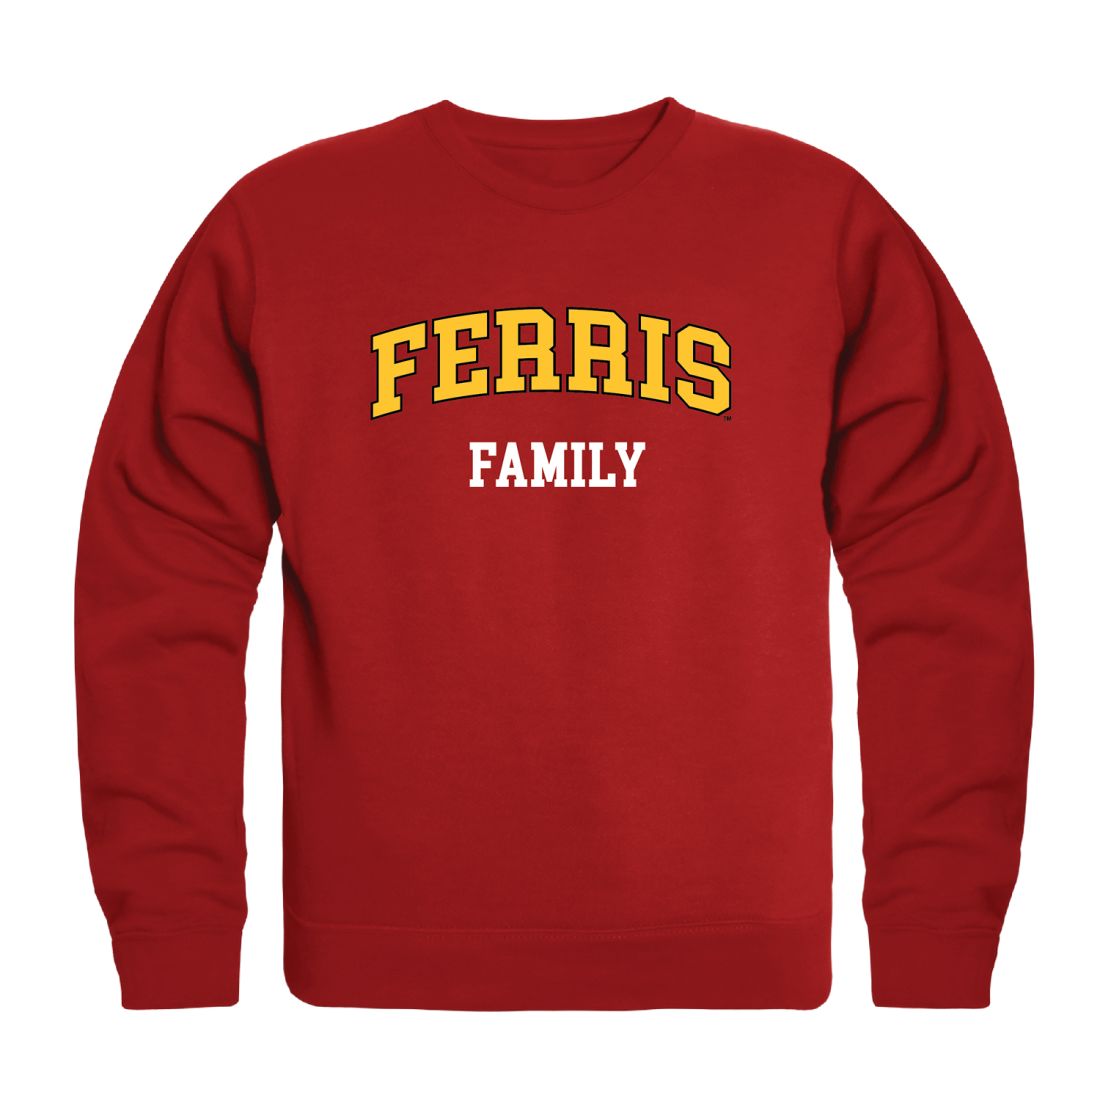 FSU-Ferris-State-University-Bulldogs-Family-Fleece-Crewneck-Pullover-Sweatshirt